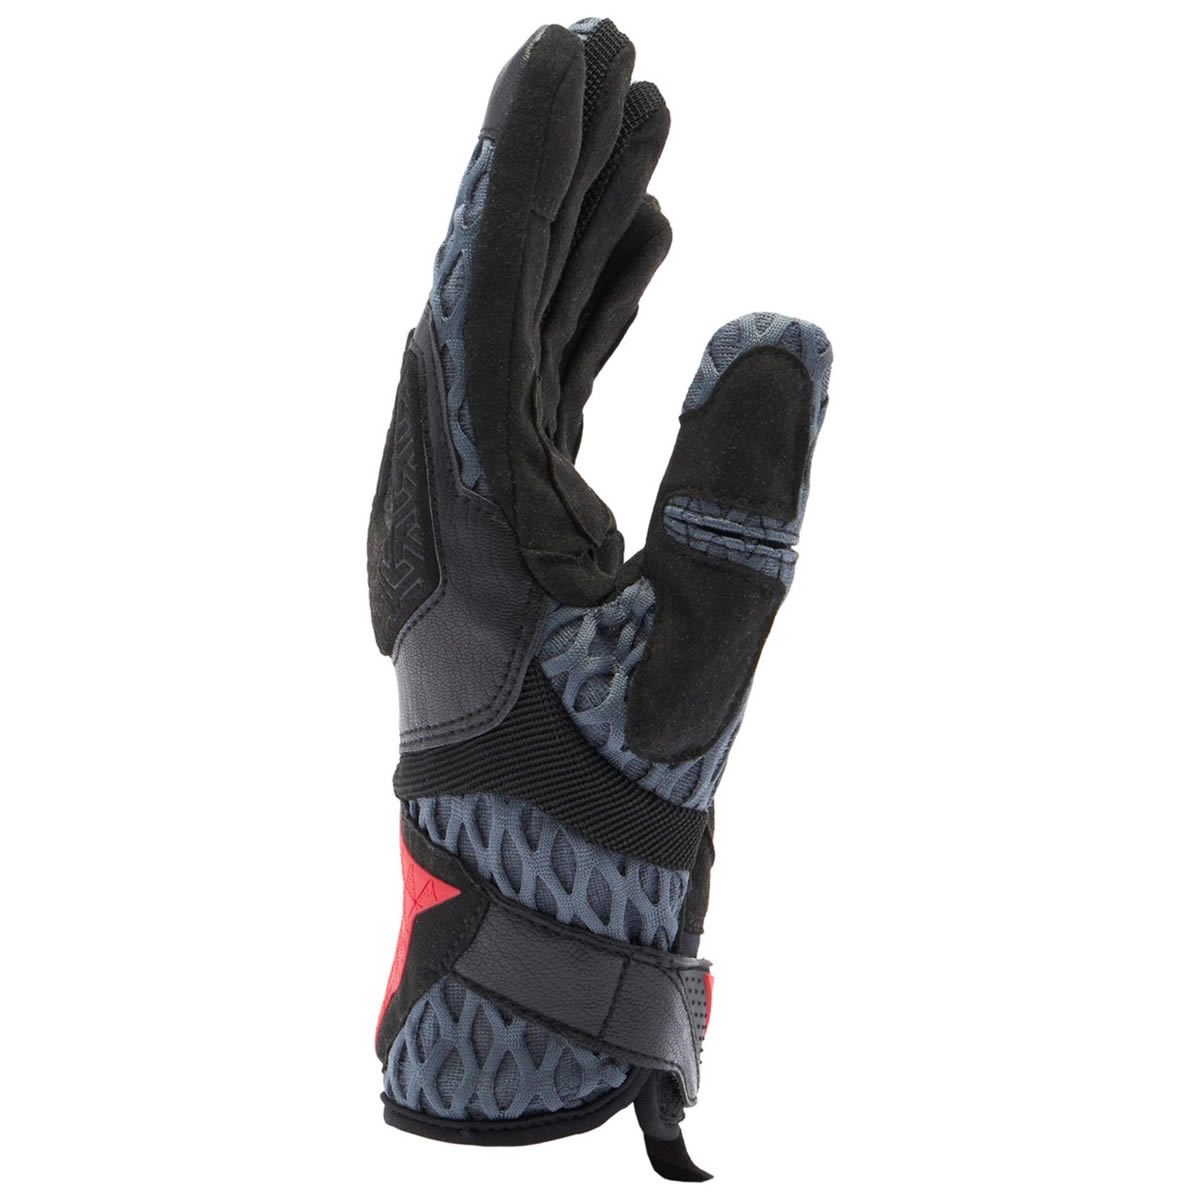 Dainese Handschuhe Air-Maze, schwarz-grau